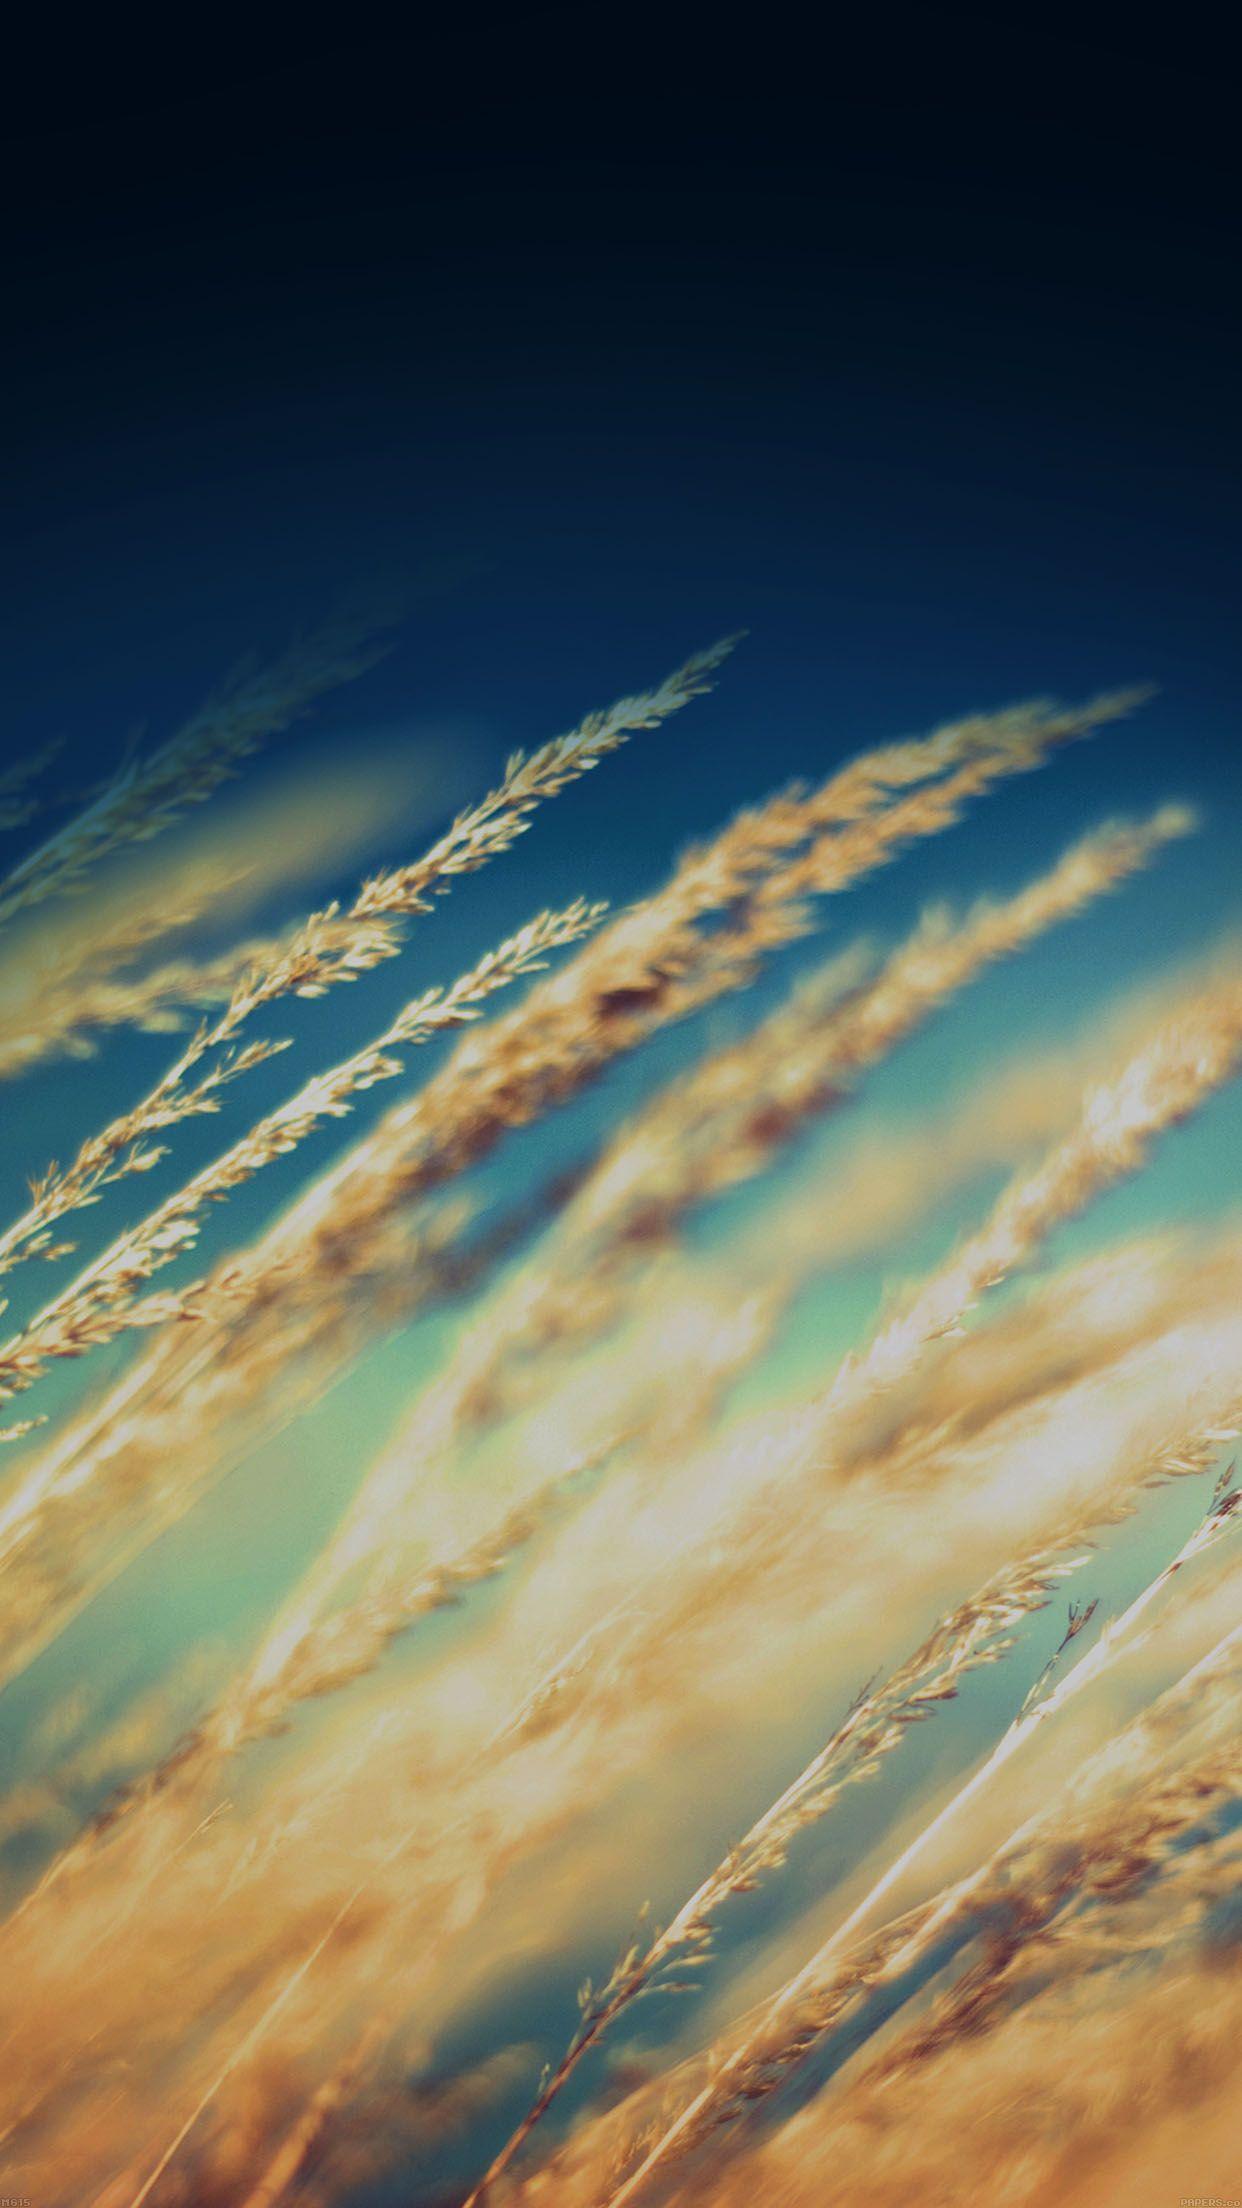 iPhone 6 wallpaper. rice field flower dark